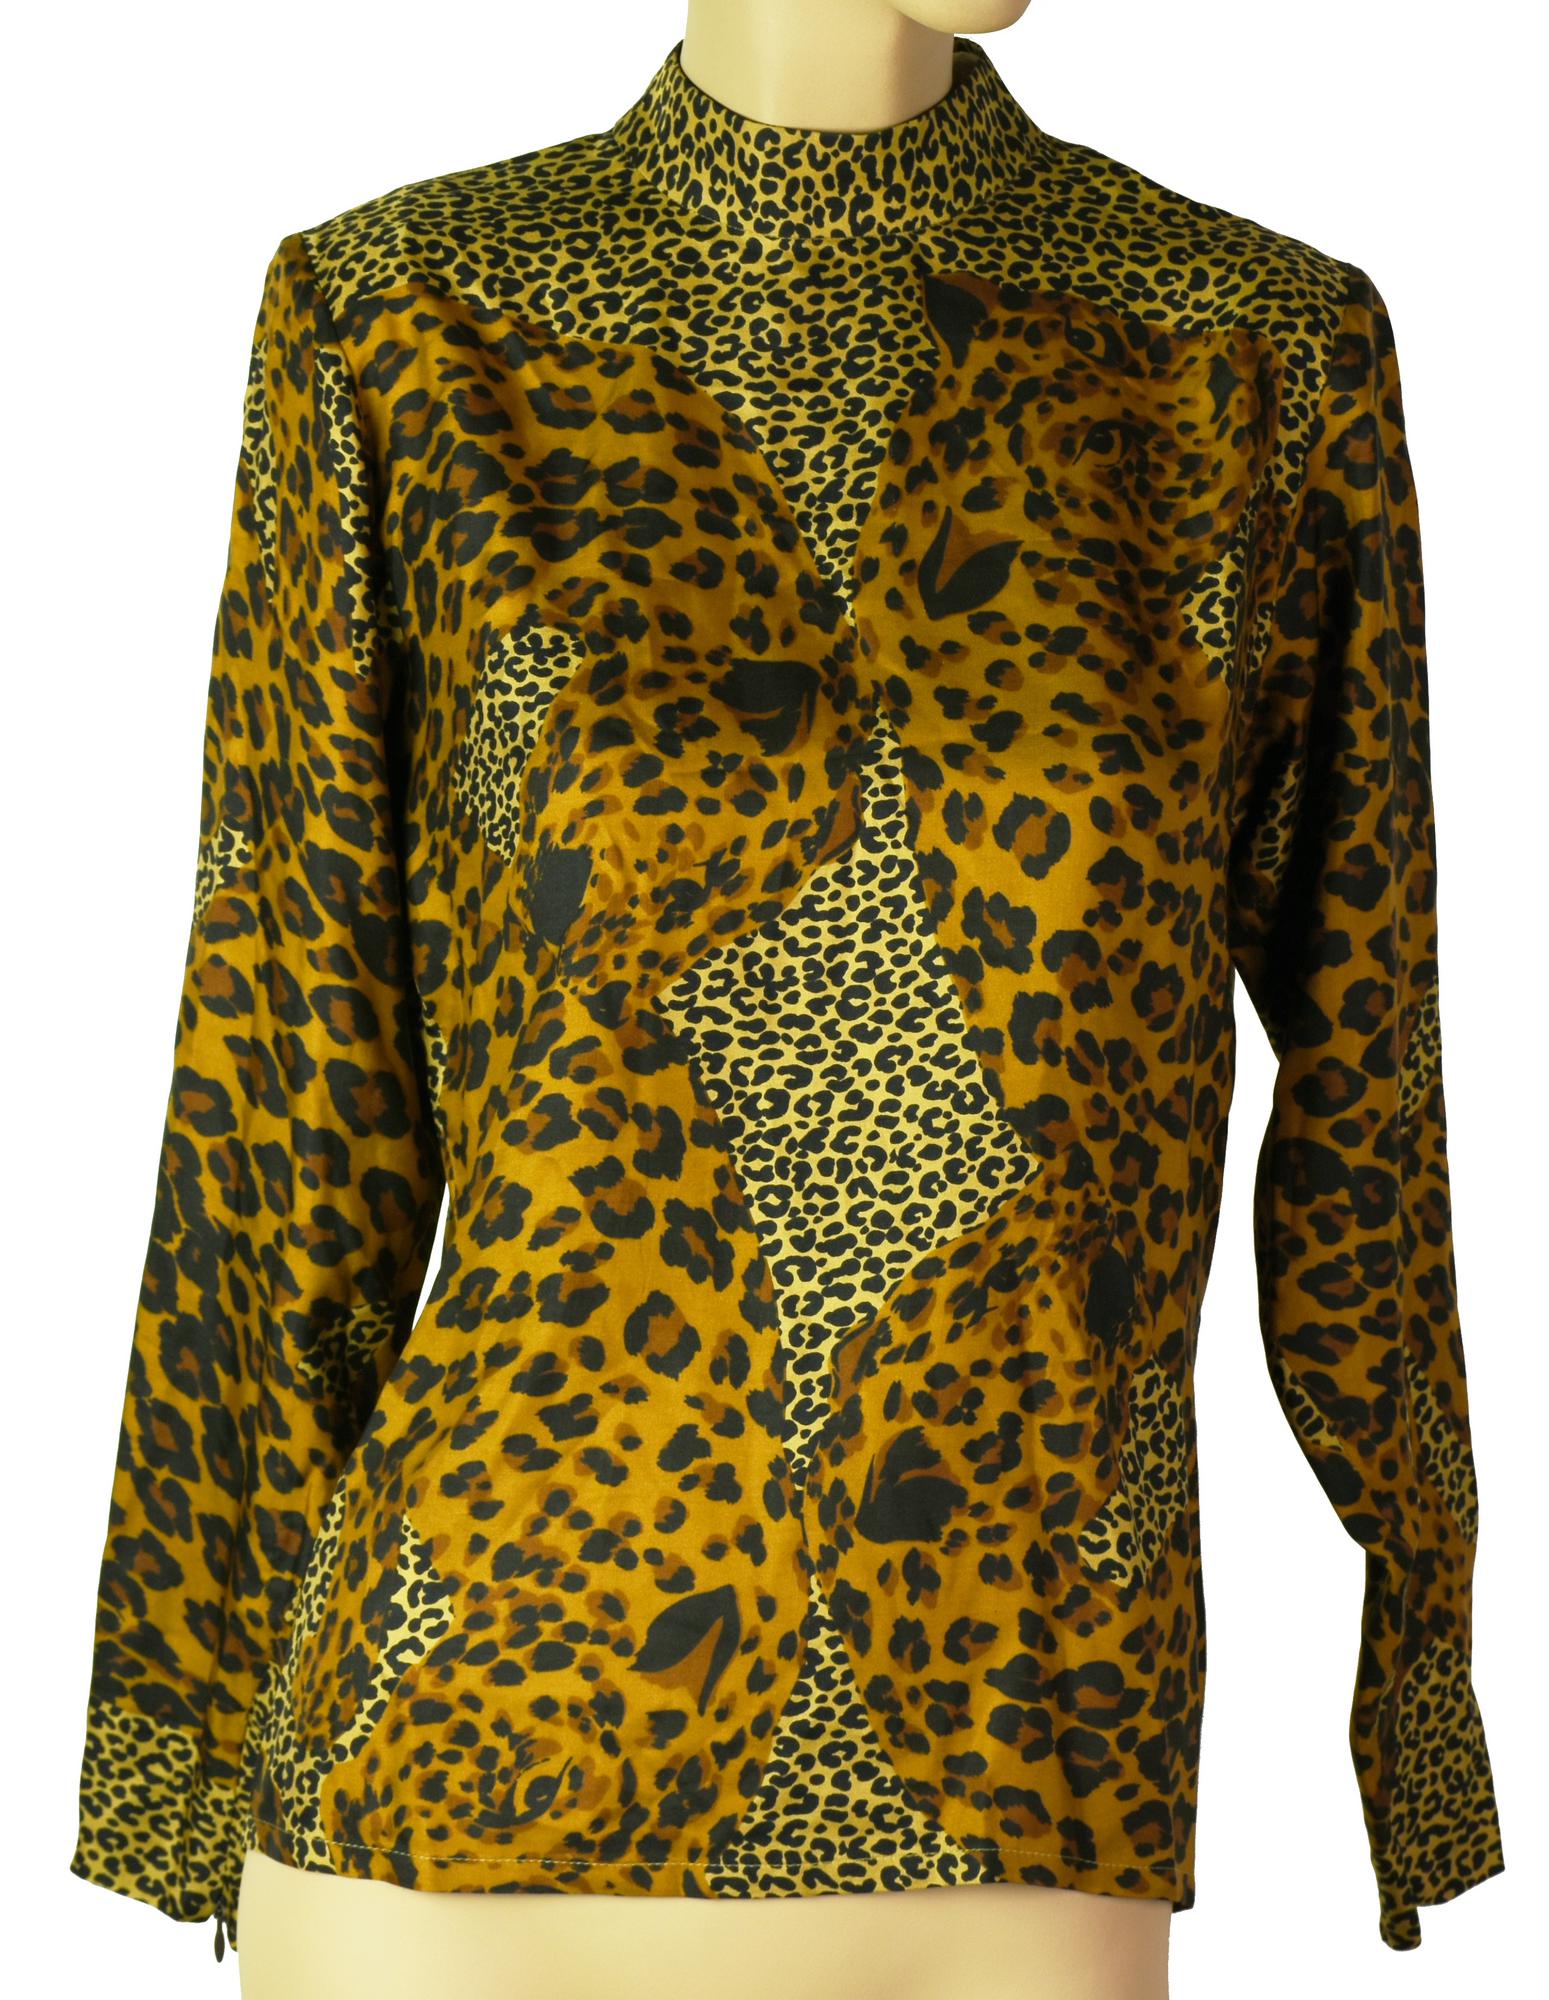 Yves Saint Laurent Rive Gauche TOP Description: Animal print silk top. Zip...